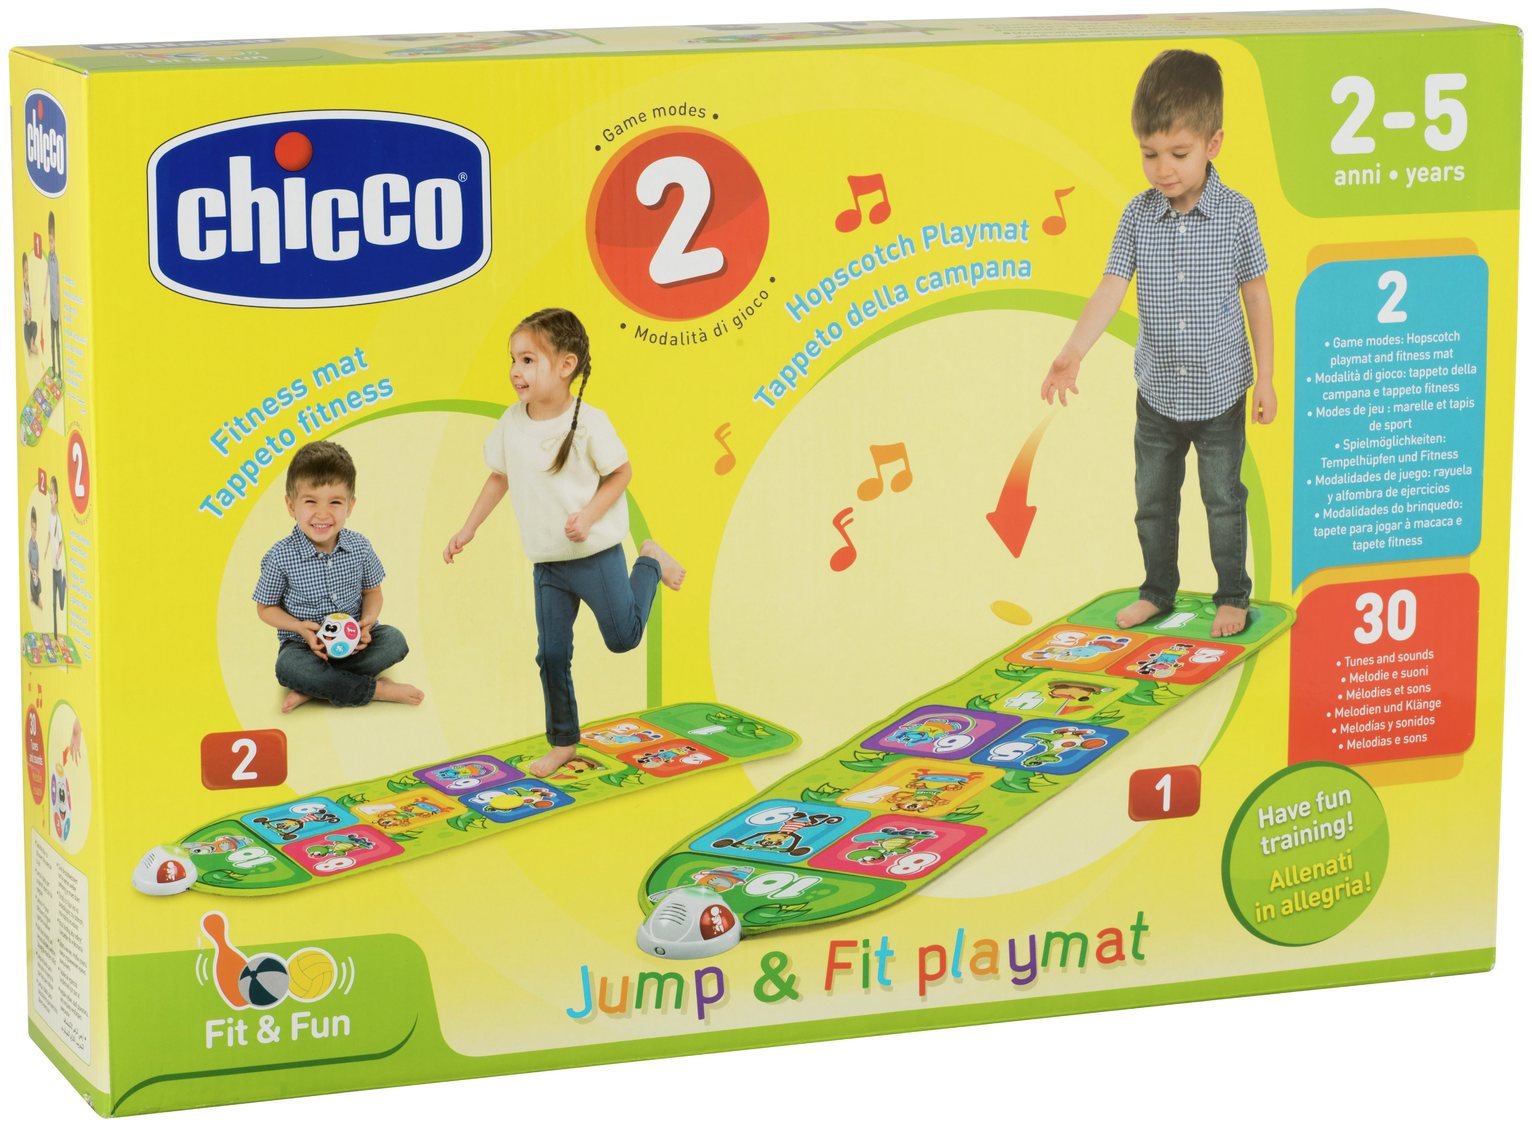 Chicco Hopscotch Jump & Fit Playmat Review